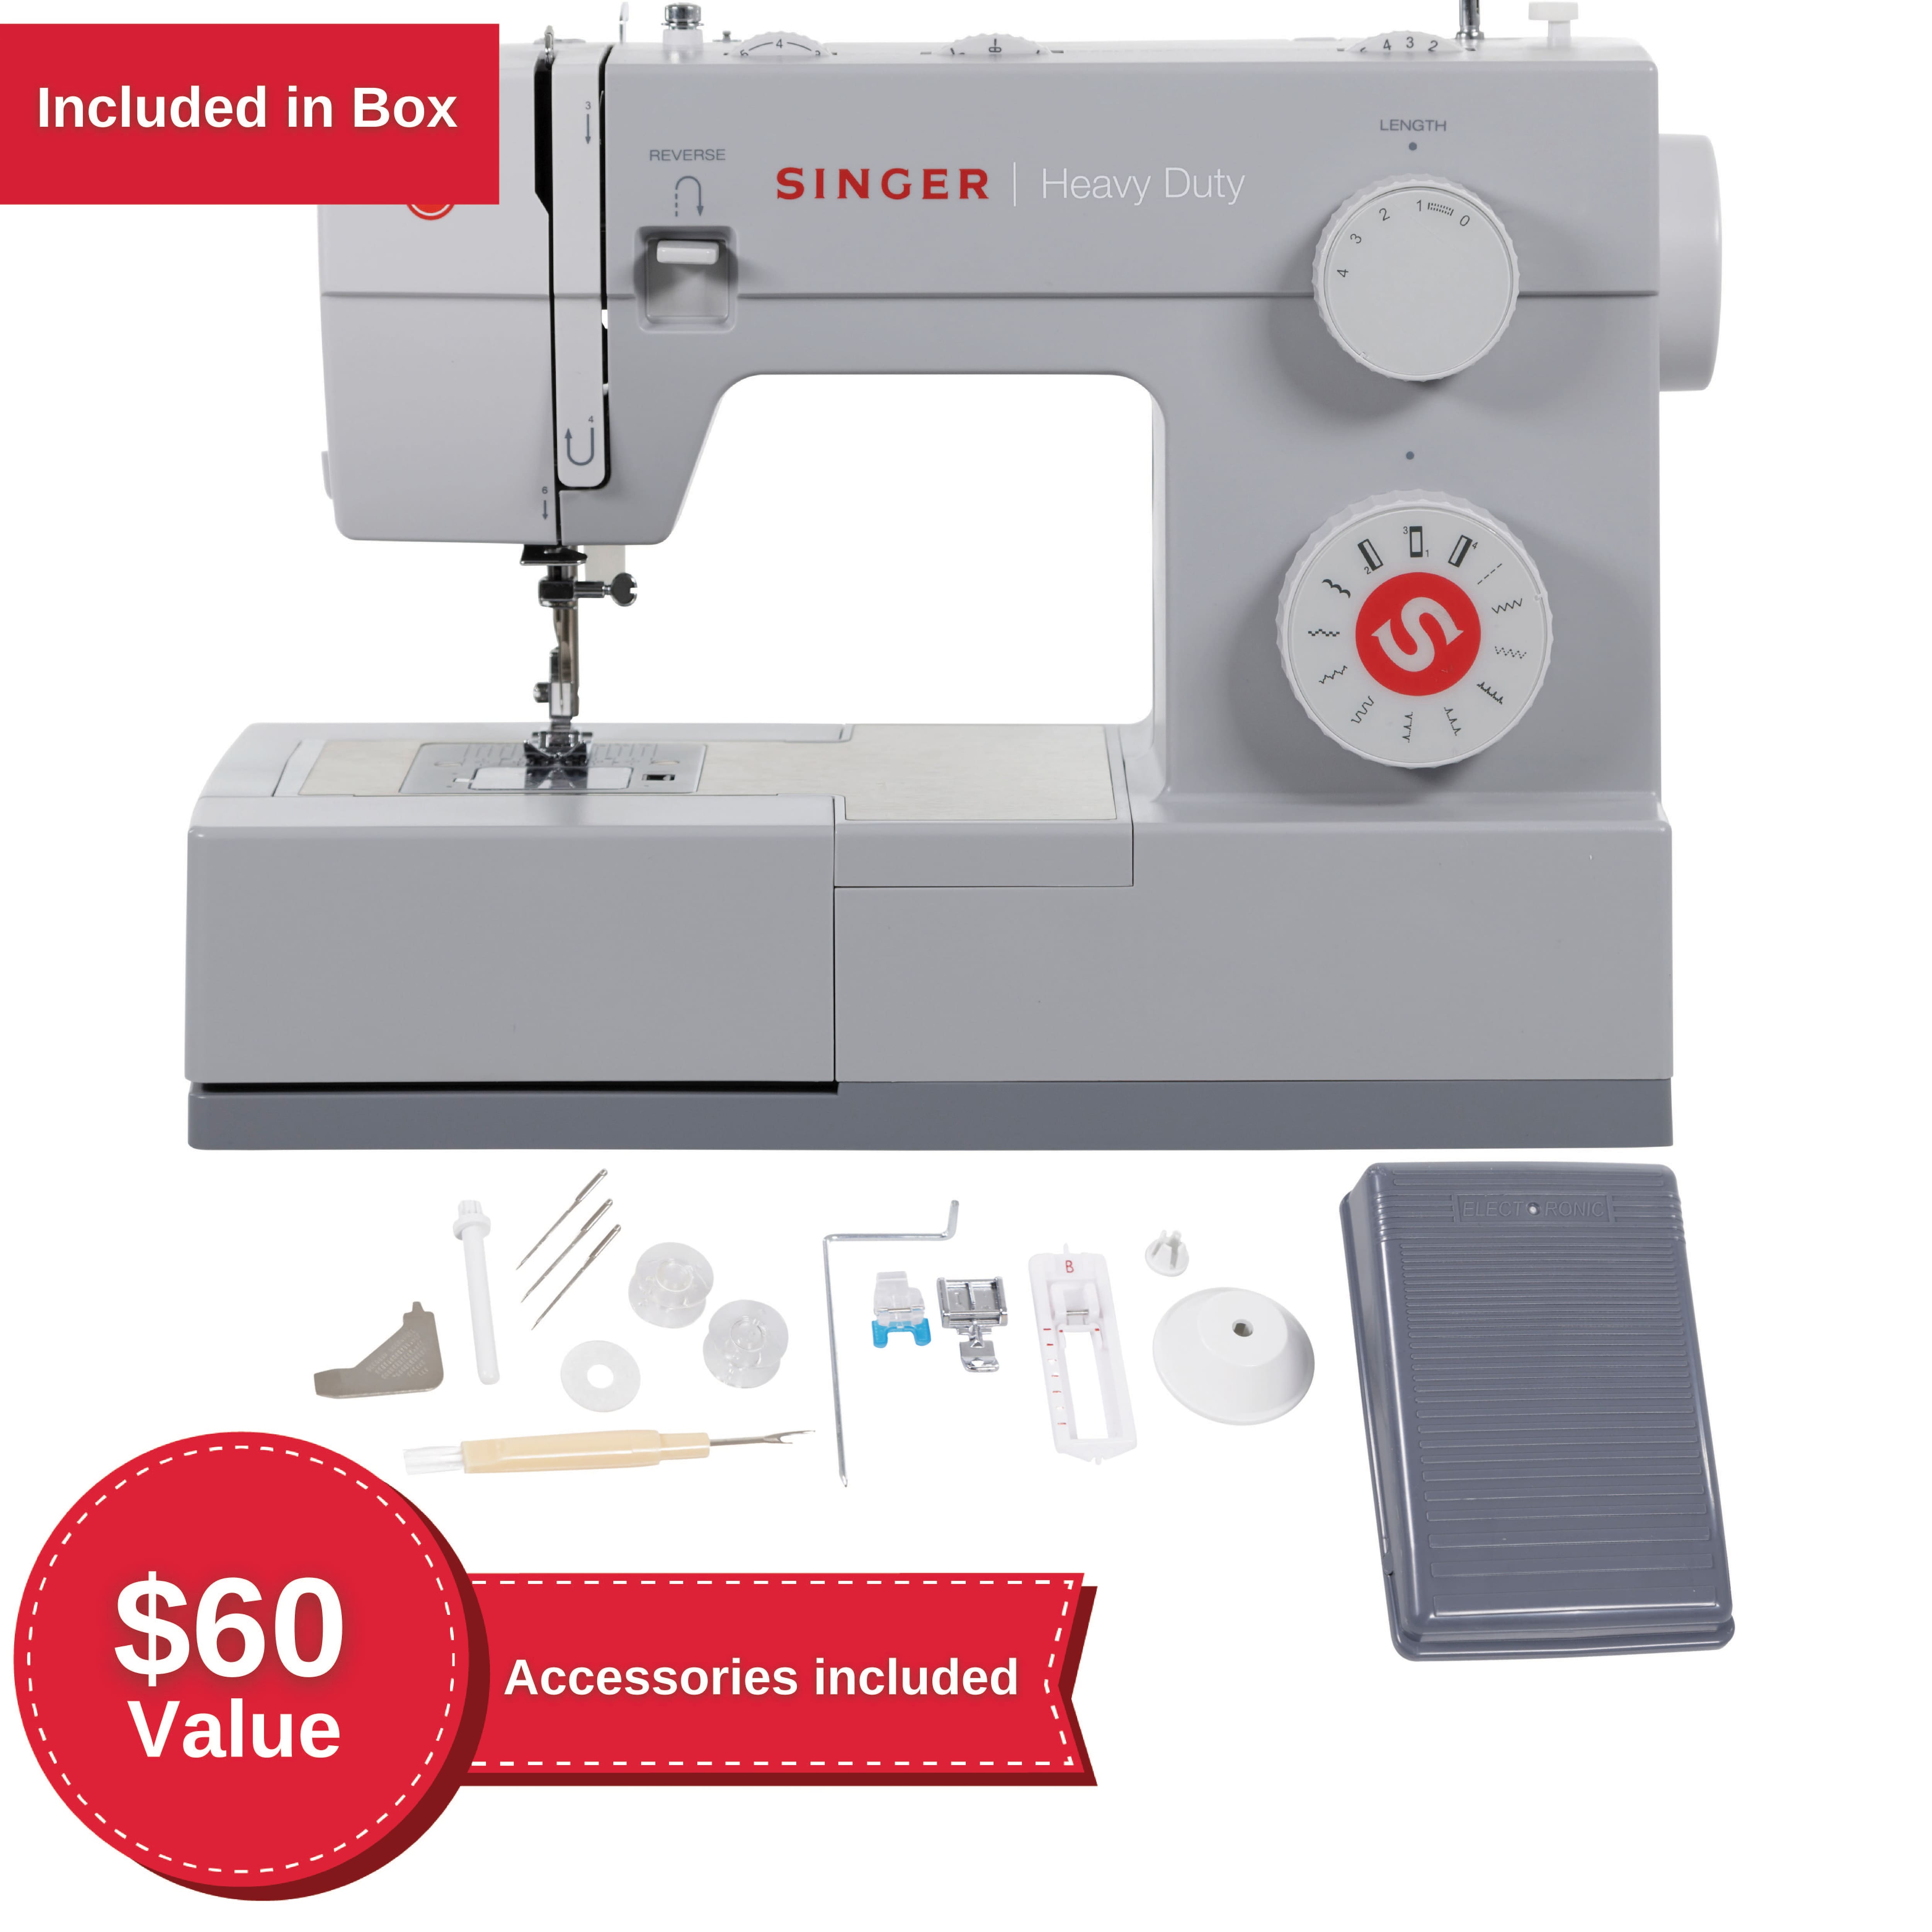 SINGER 4411 Heavy Duty 120W Portable Sewing Machine - White 374318830018